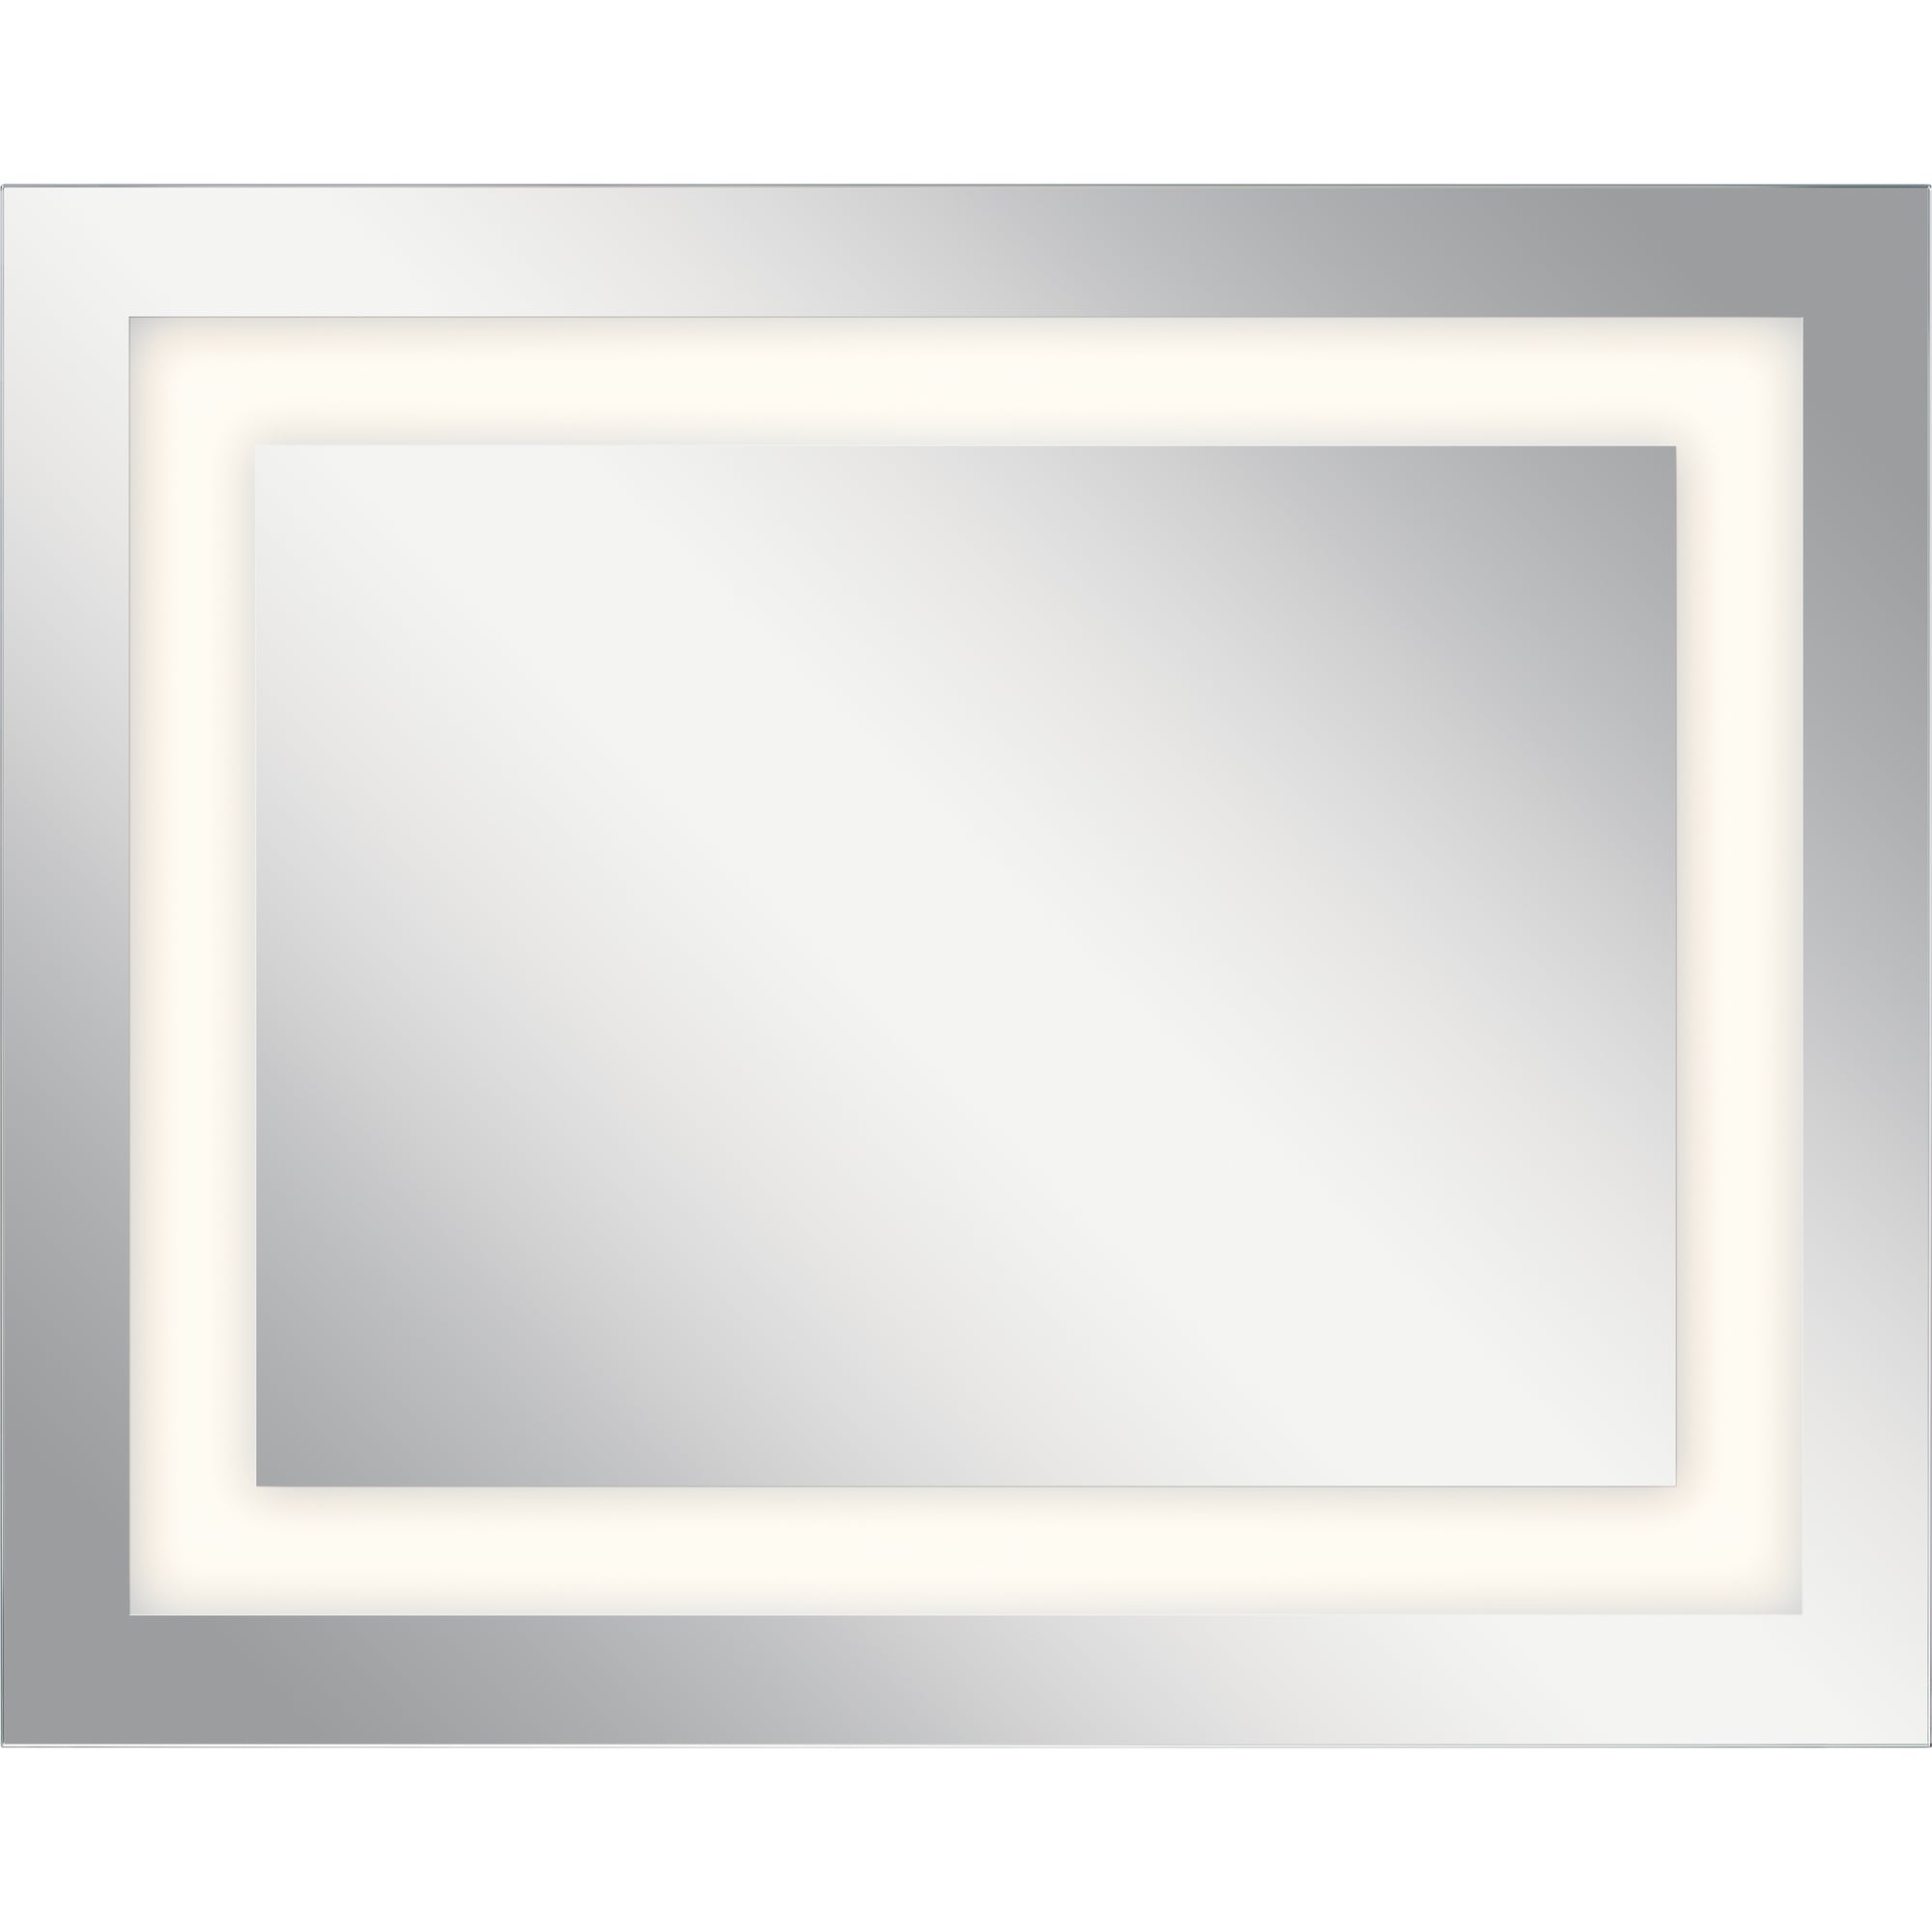 SIGNATURE Lighting mirror - 83995 | ELAN